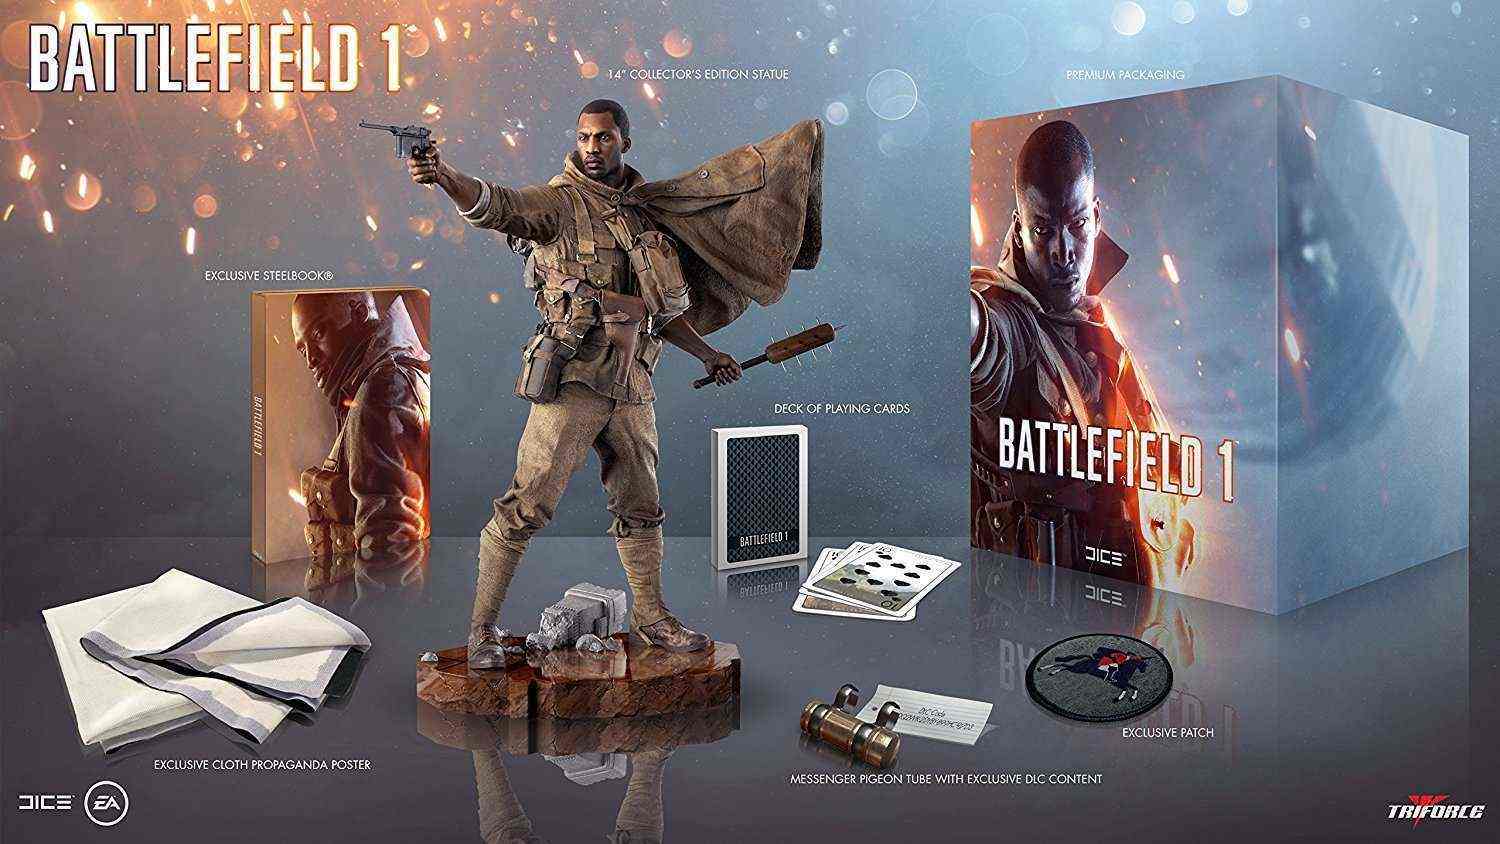 Battlefield 1 Colletors Edition gÃ¼nstig kaufen bei Amazon.de